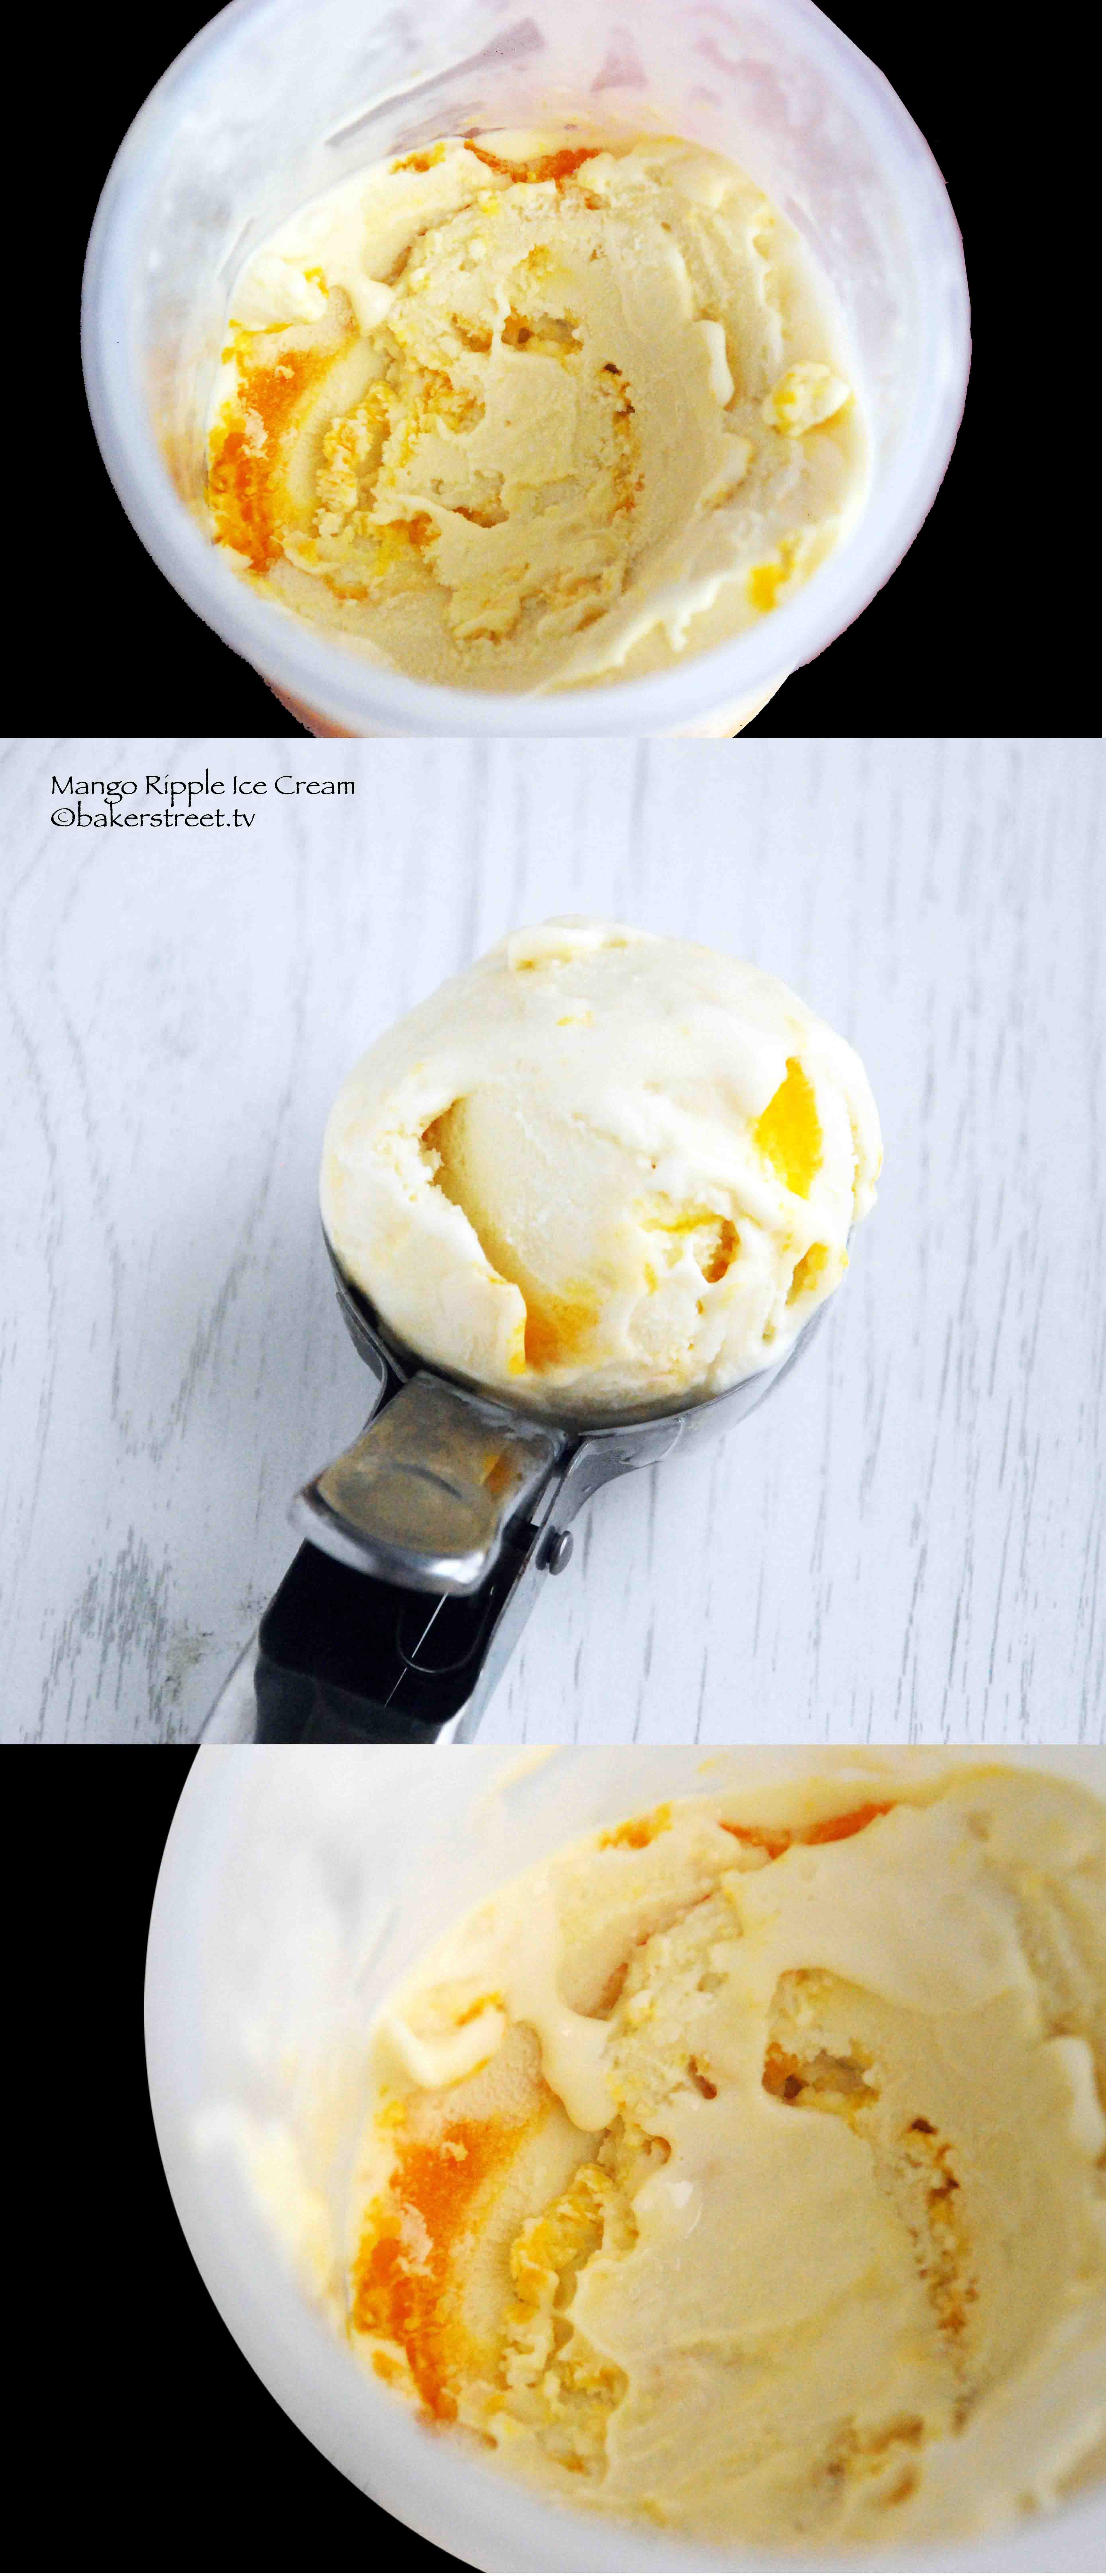 Mango Ripple Ice Cream Baker Street